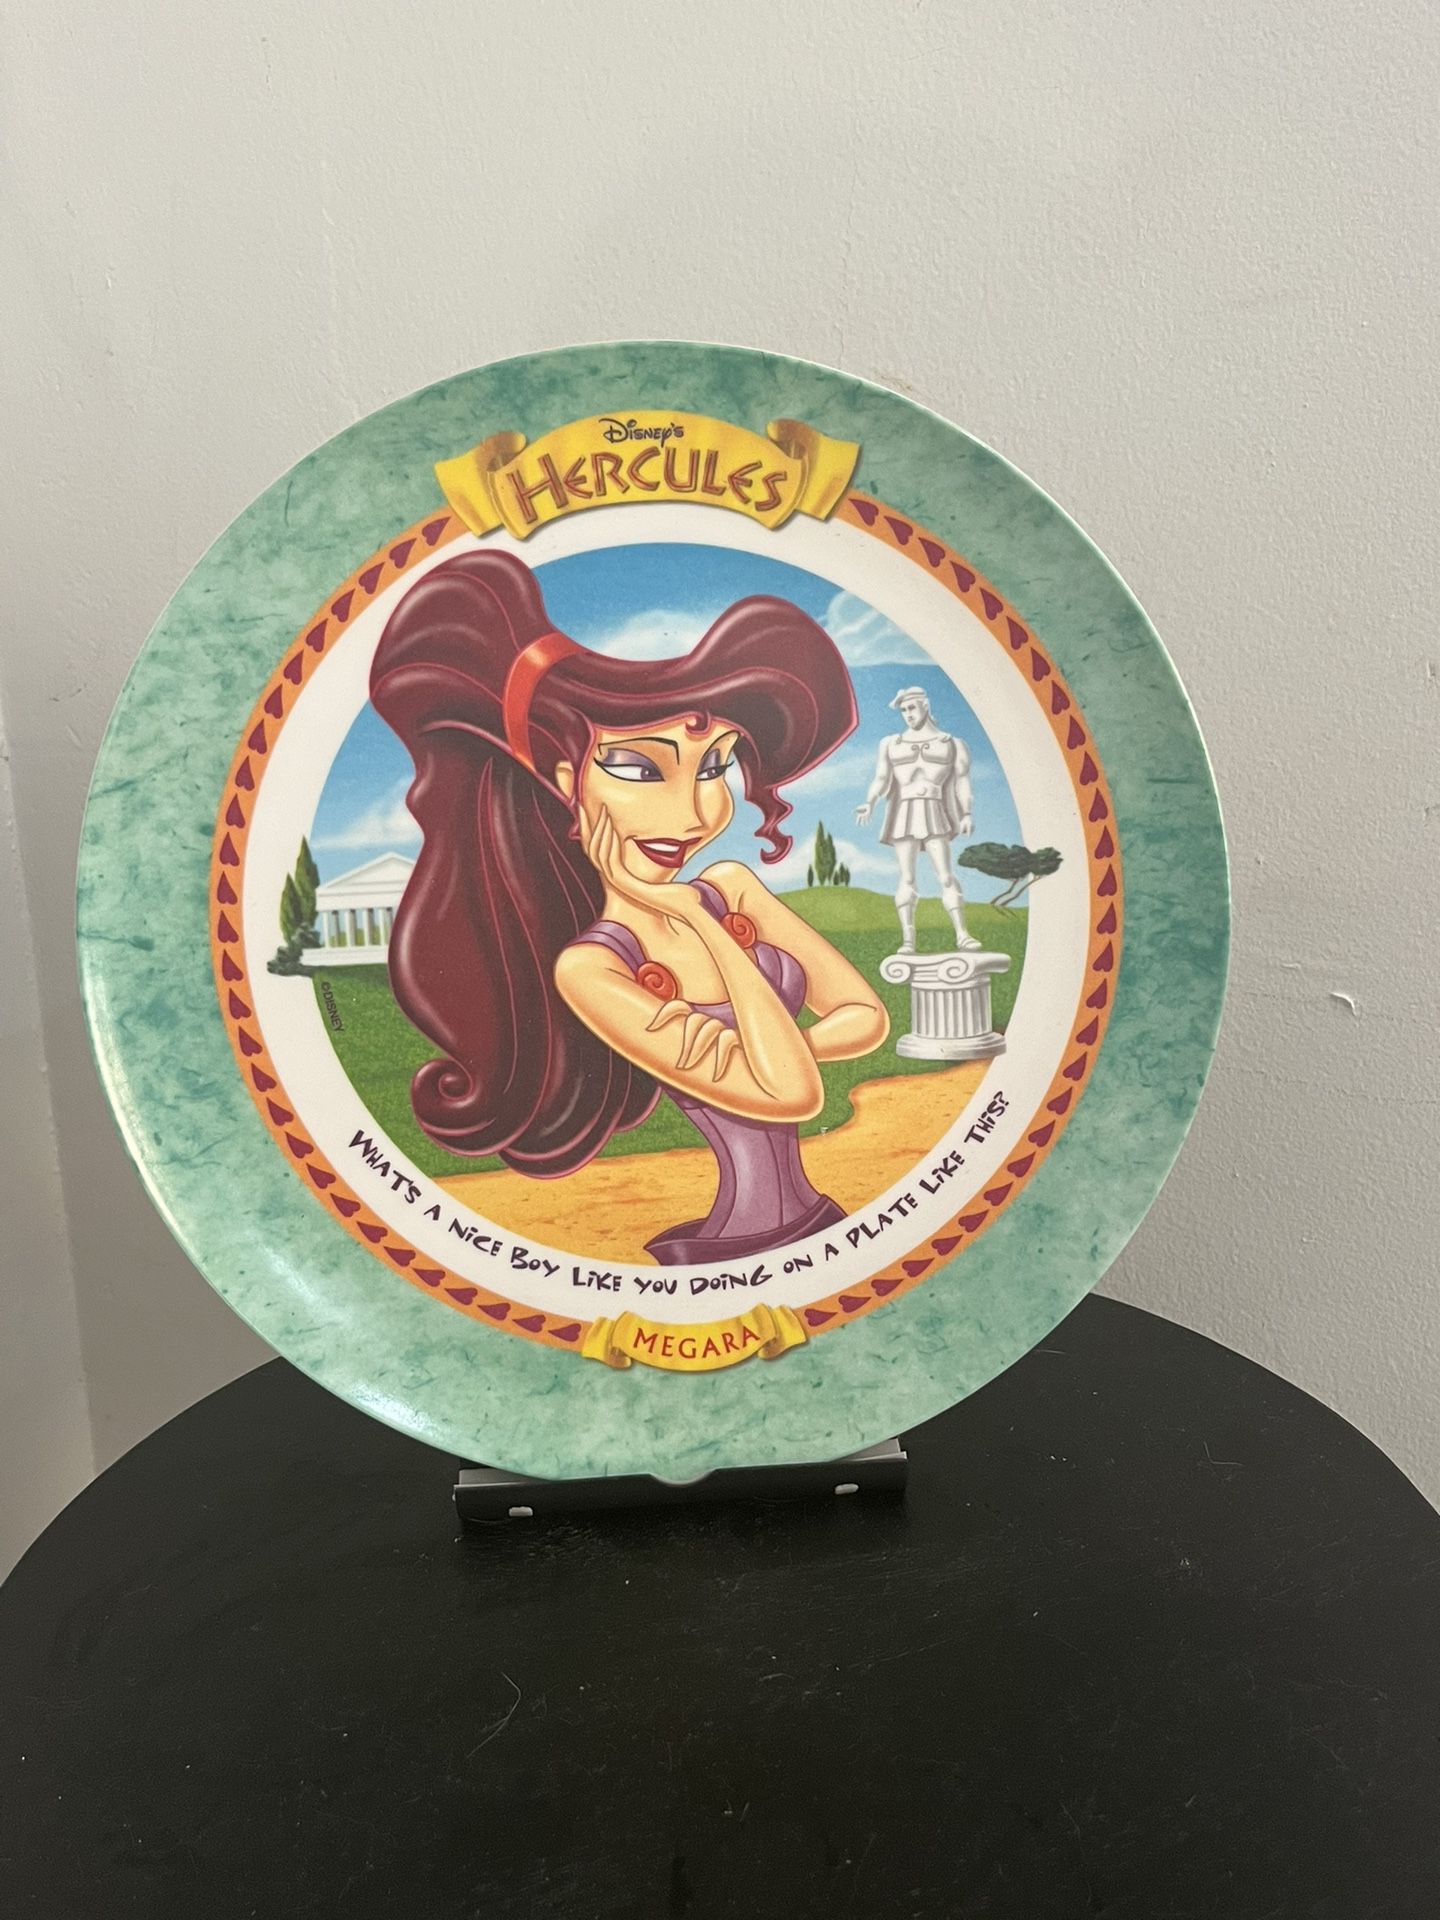 Disney Hercules Megara McDonald's Plate 1997 Vintage 